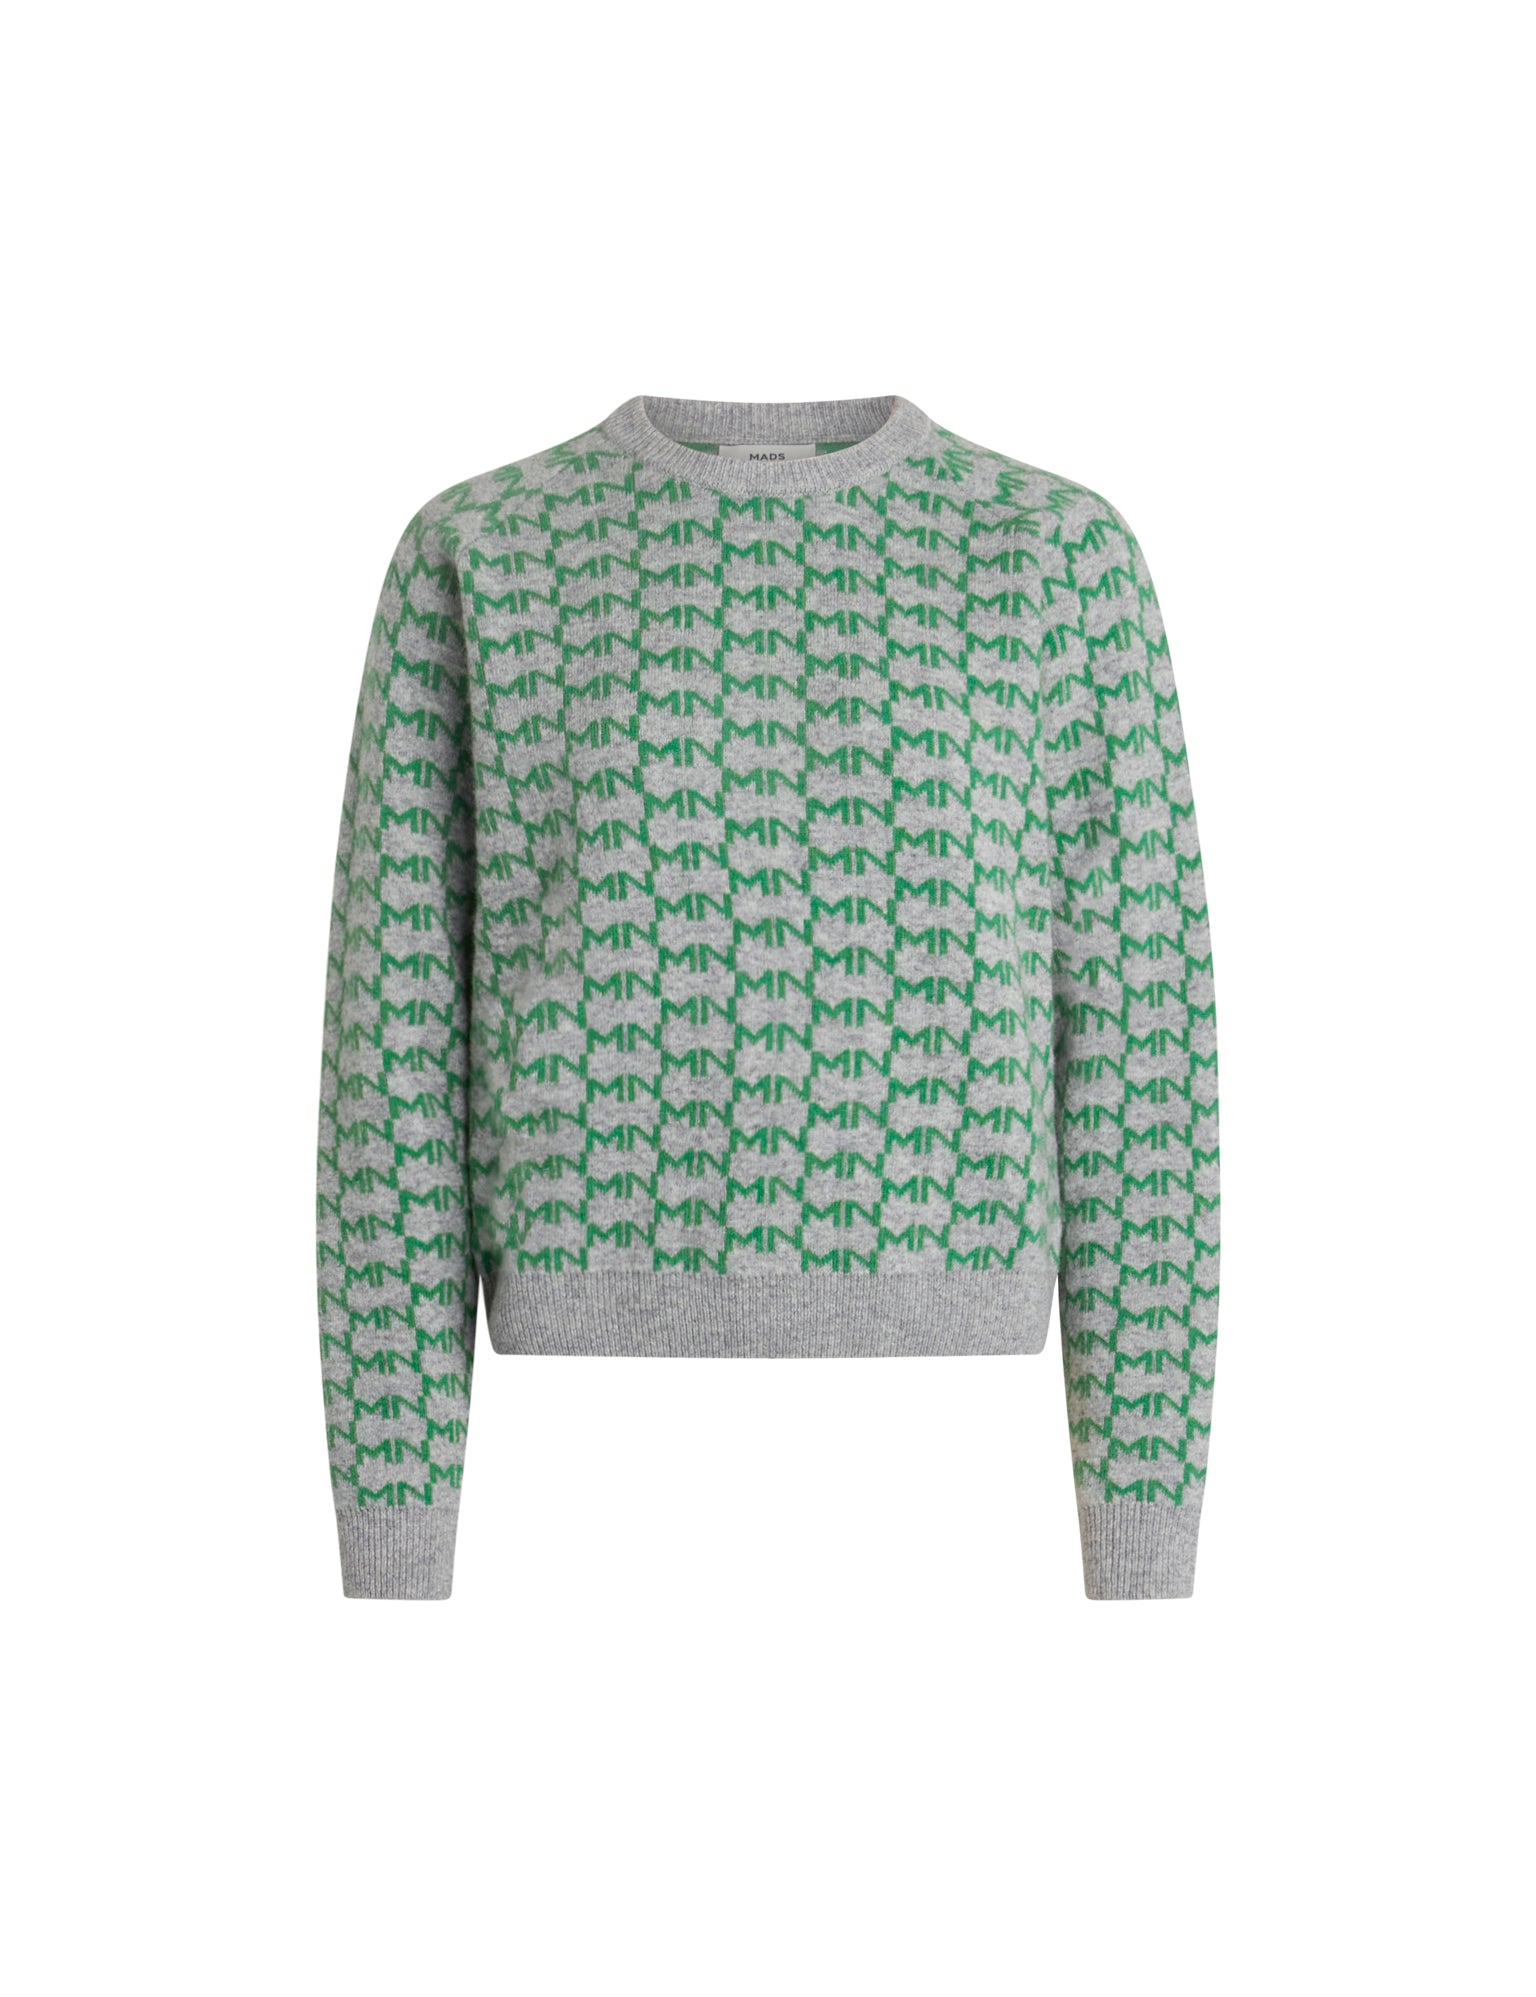 Mads Norgaard Kono Sweater Light Grey Melange/Deep Mint